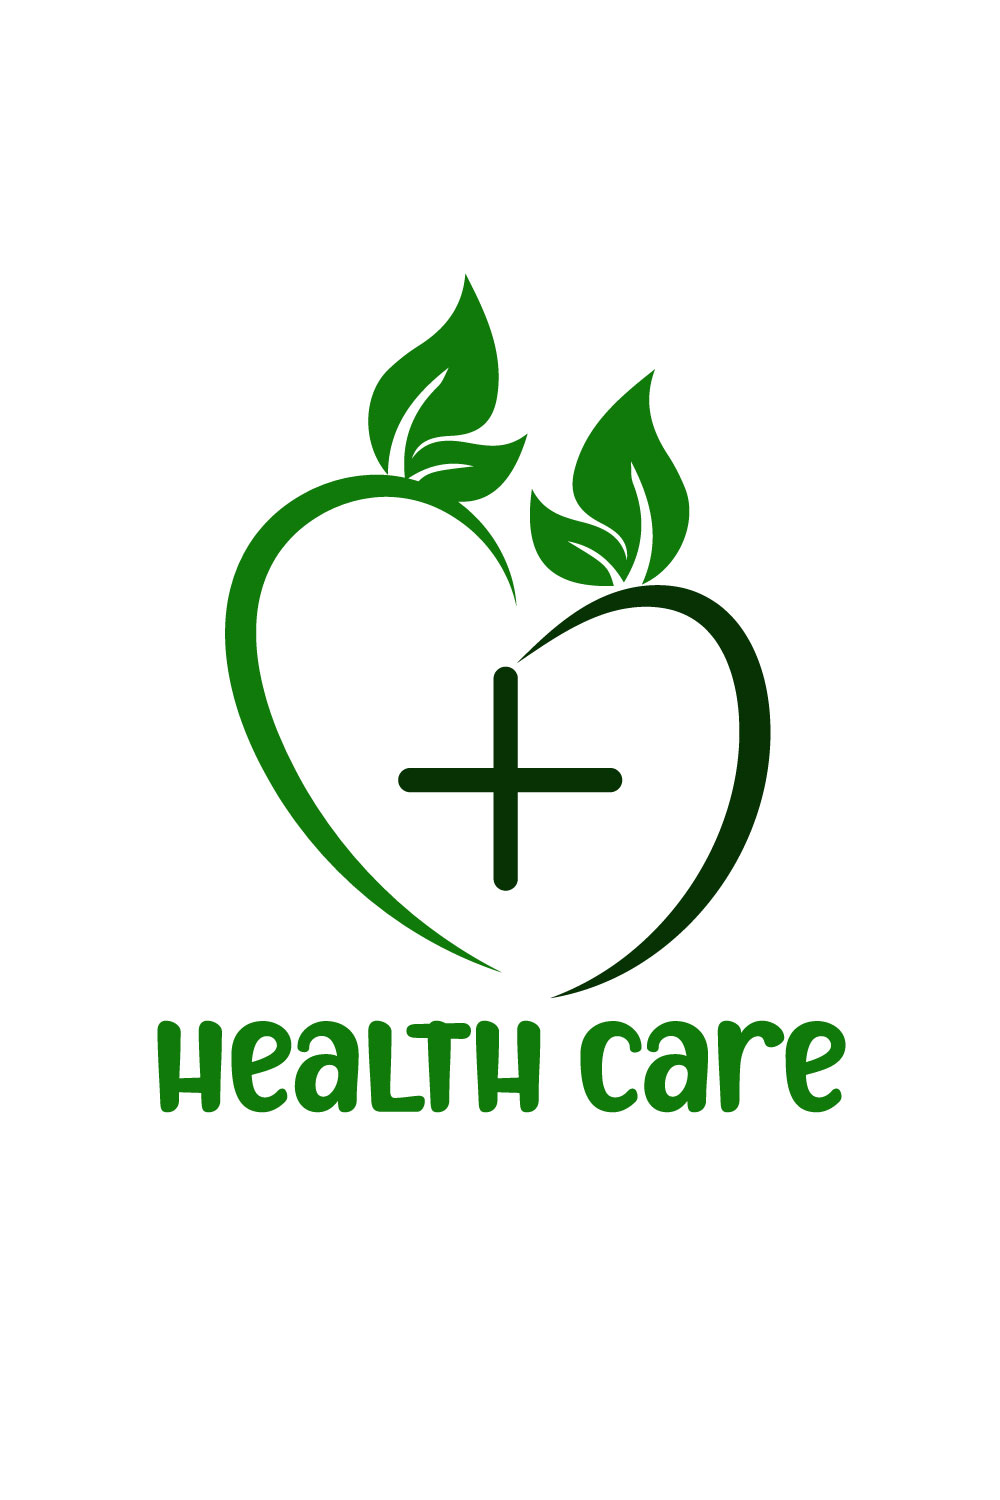 Free Medical Association logo pinterest preview image.